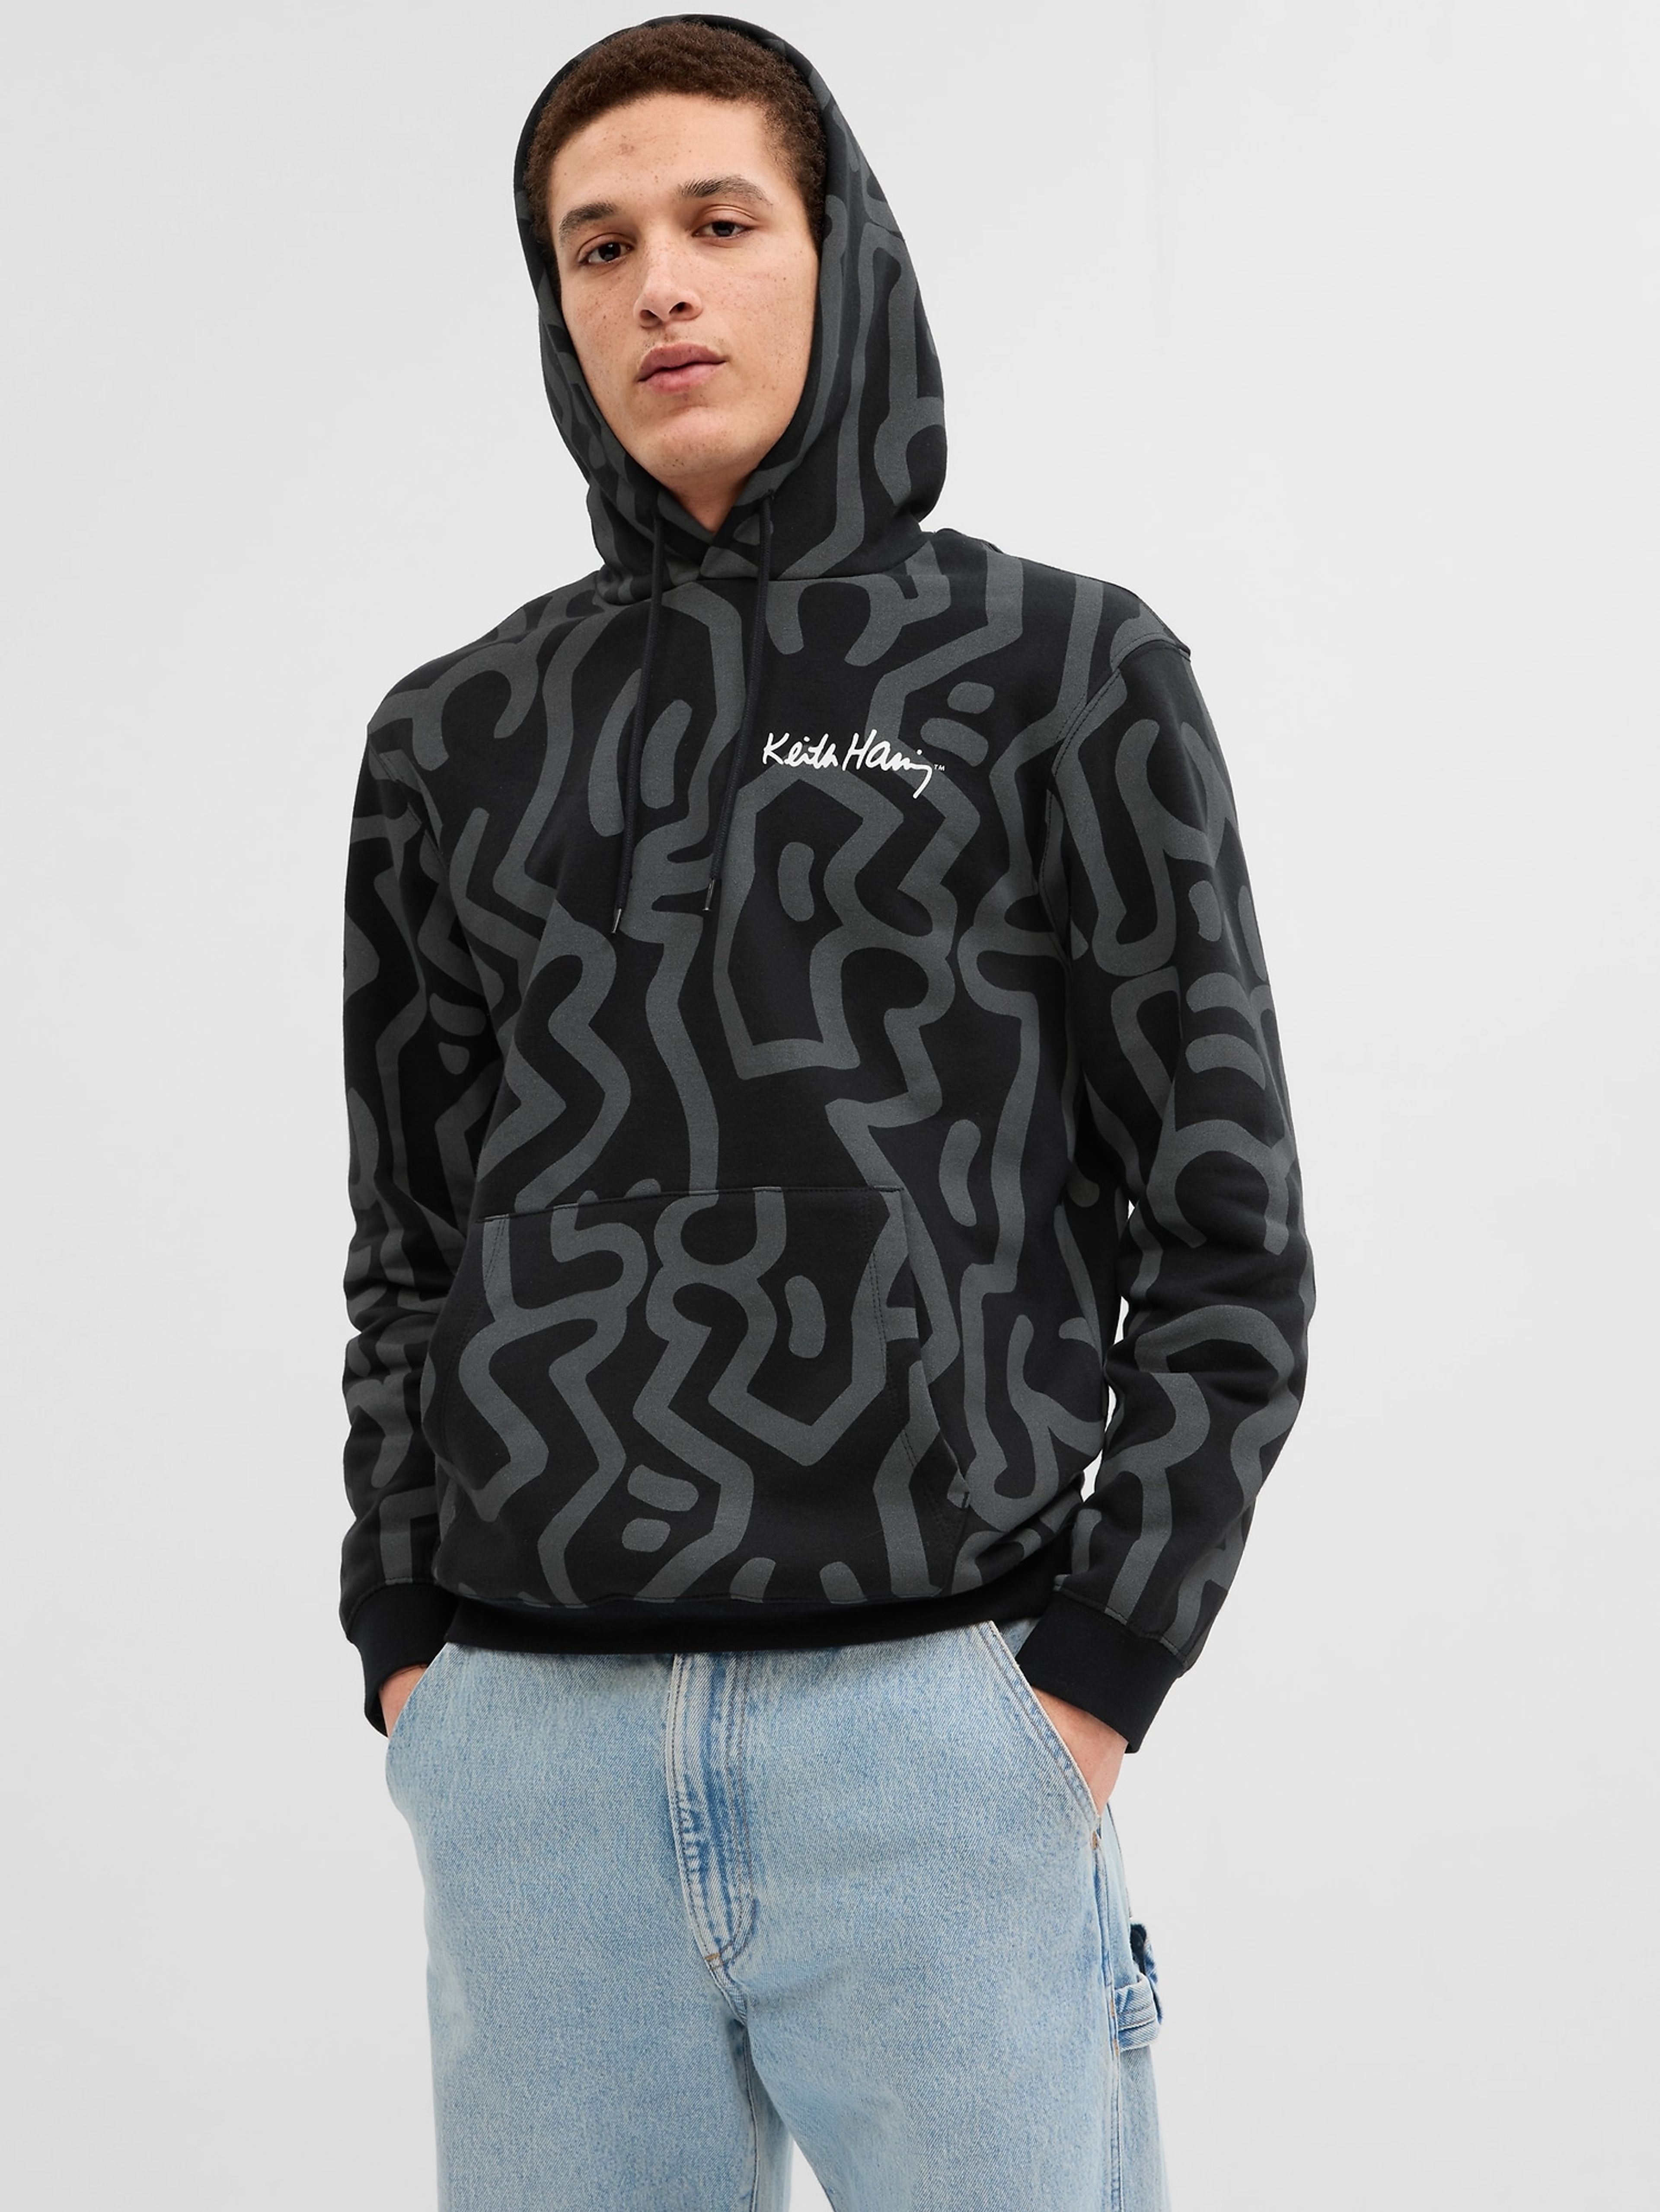 Sweatshirt GAP × Keith Haring Unisex